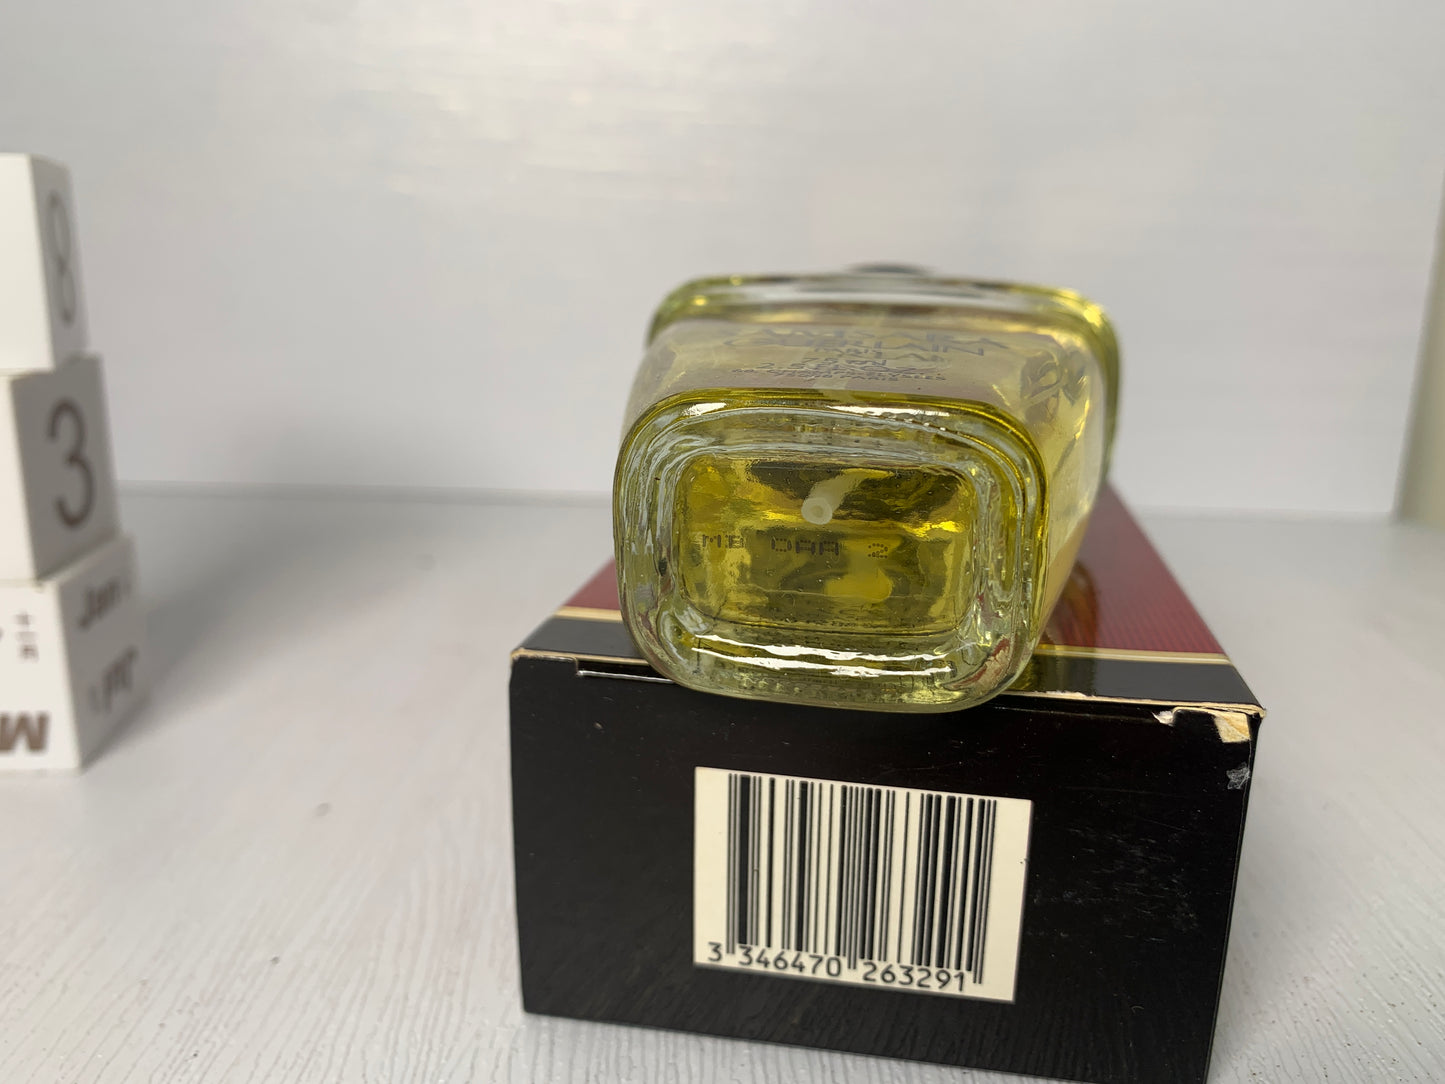 Guerlain Samsara deodorant 75ml 2.5 oz  with box   - 14NOV